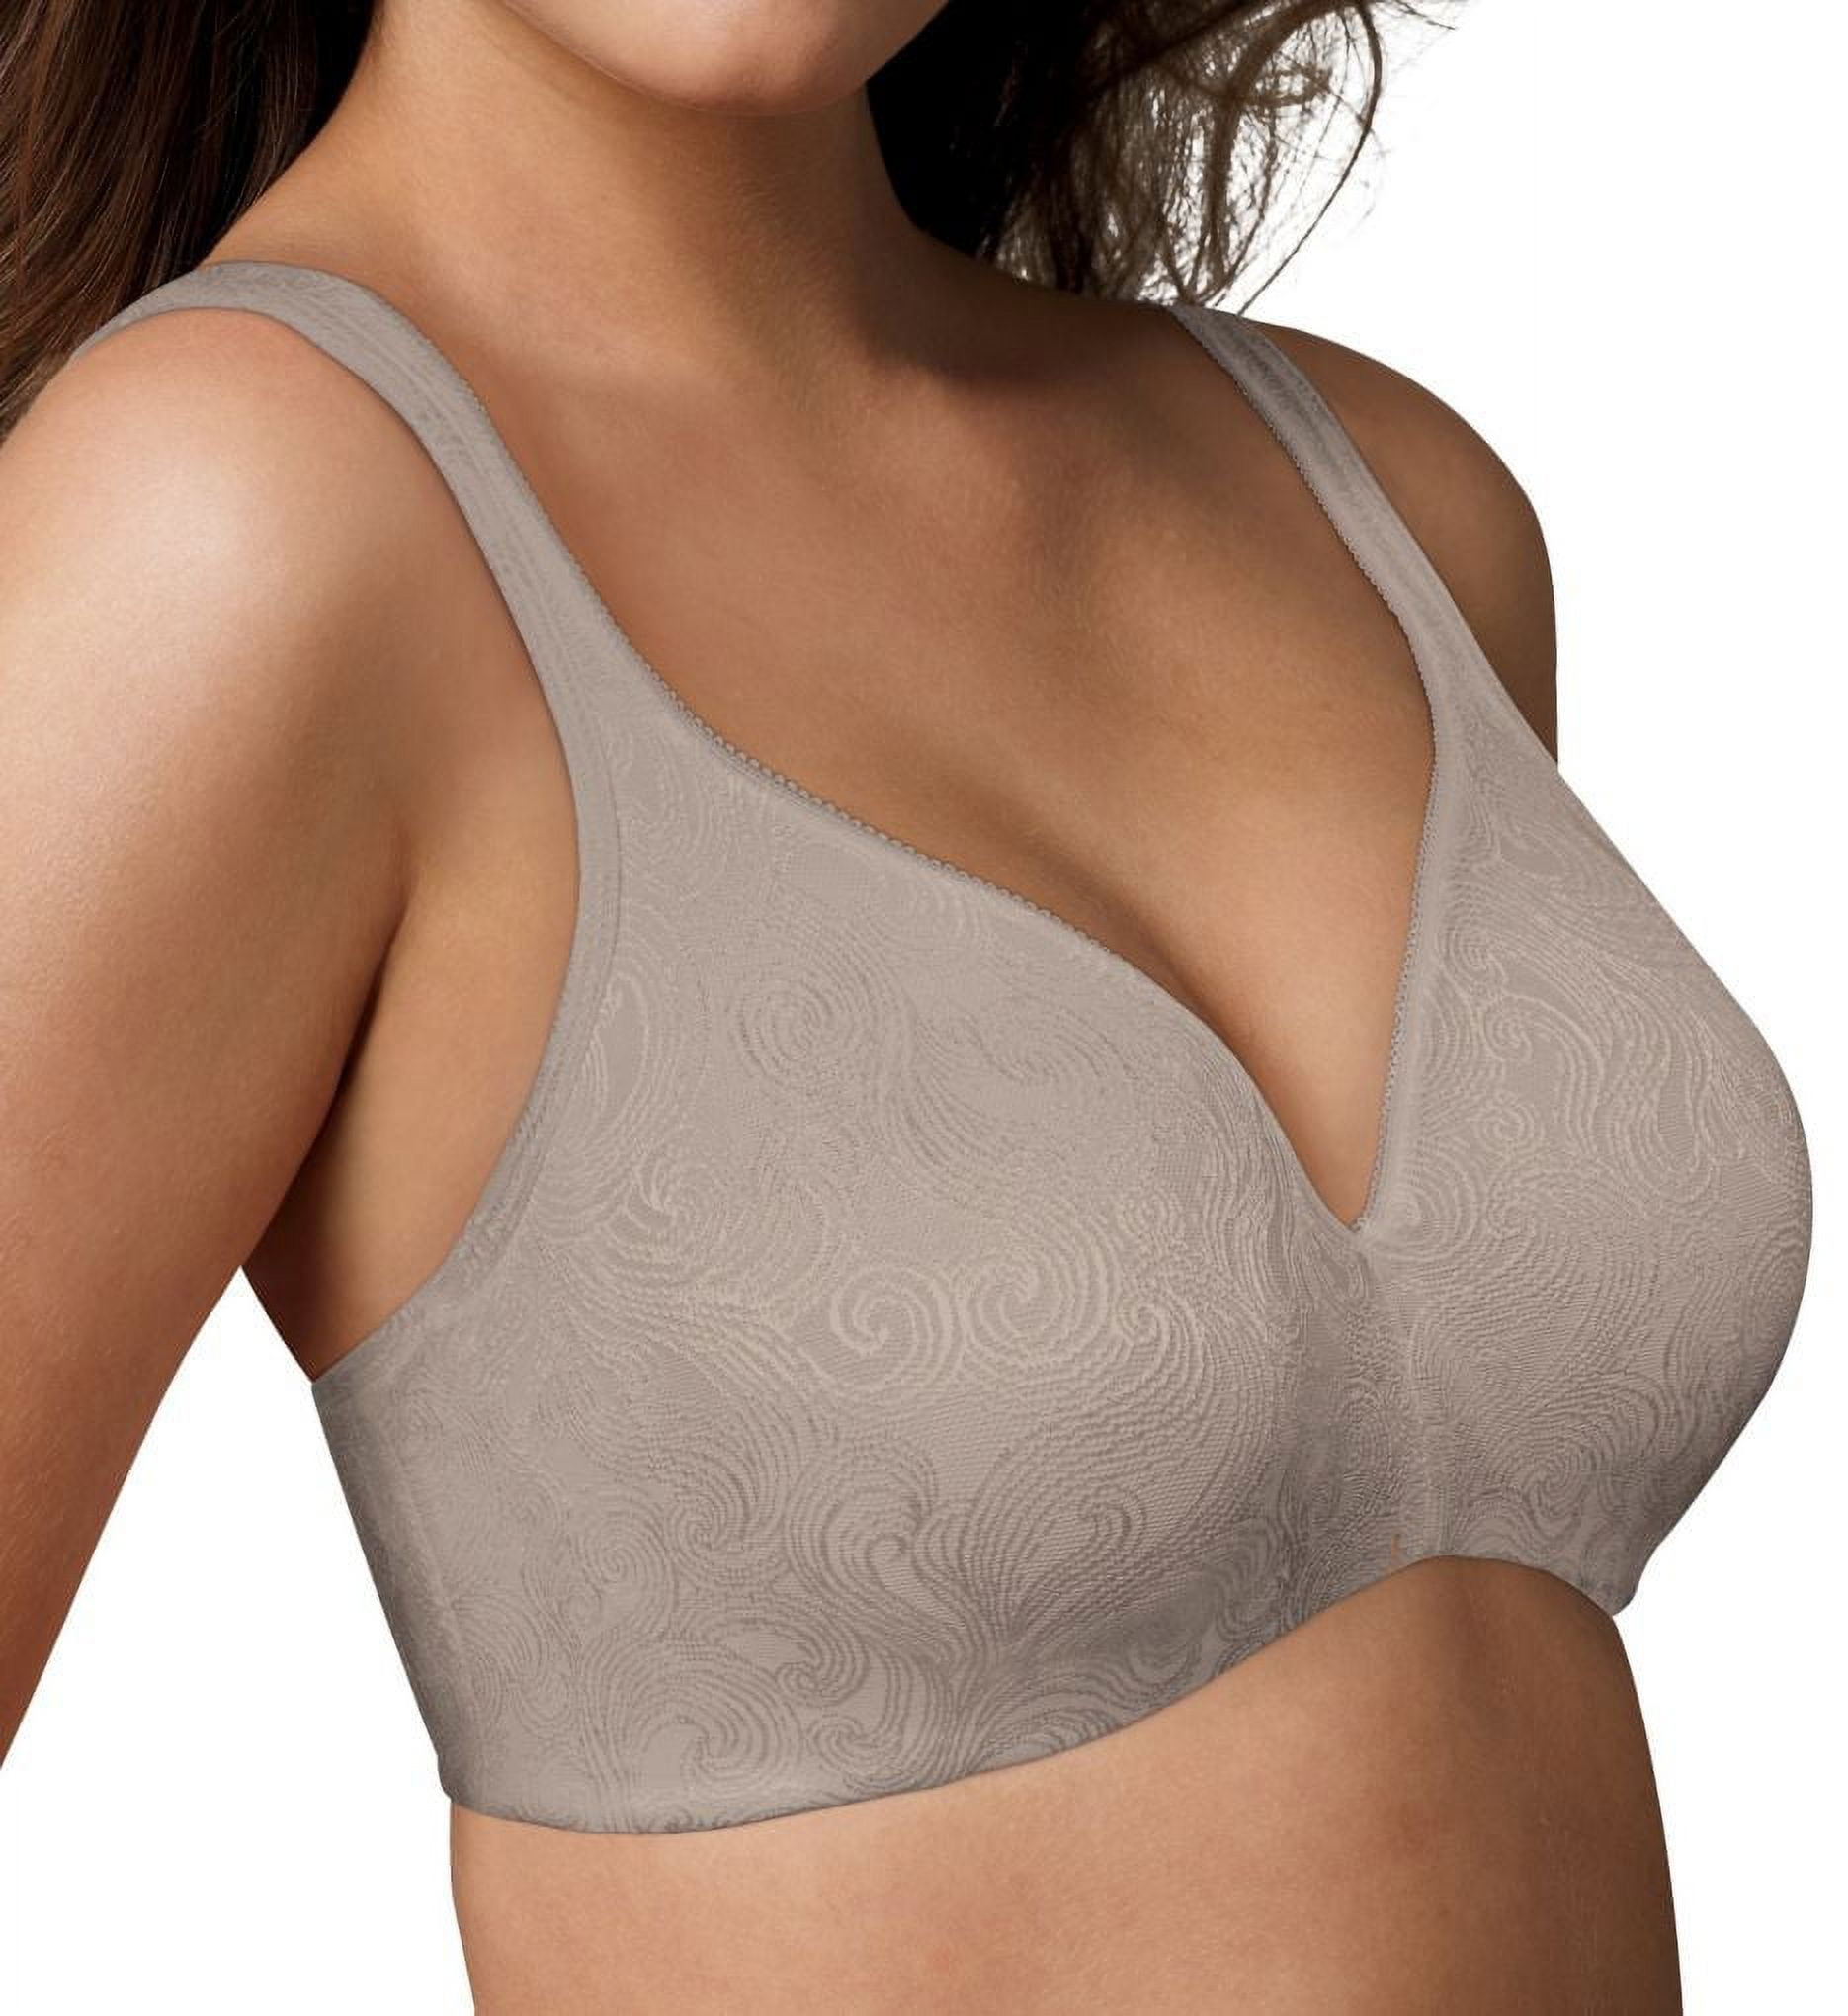 playtex women's secrets undercover slimming underwire bra white jacquard  36c 36c ju 